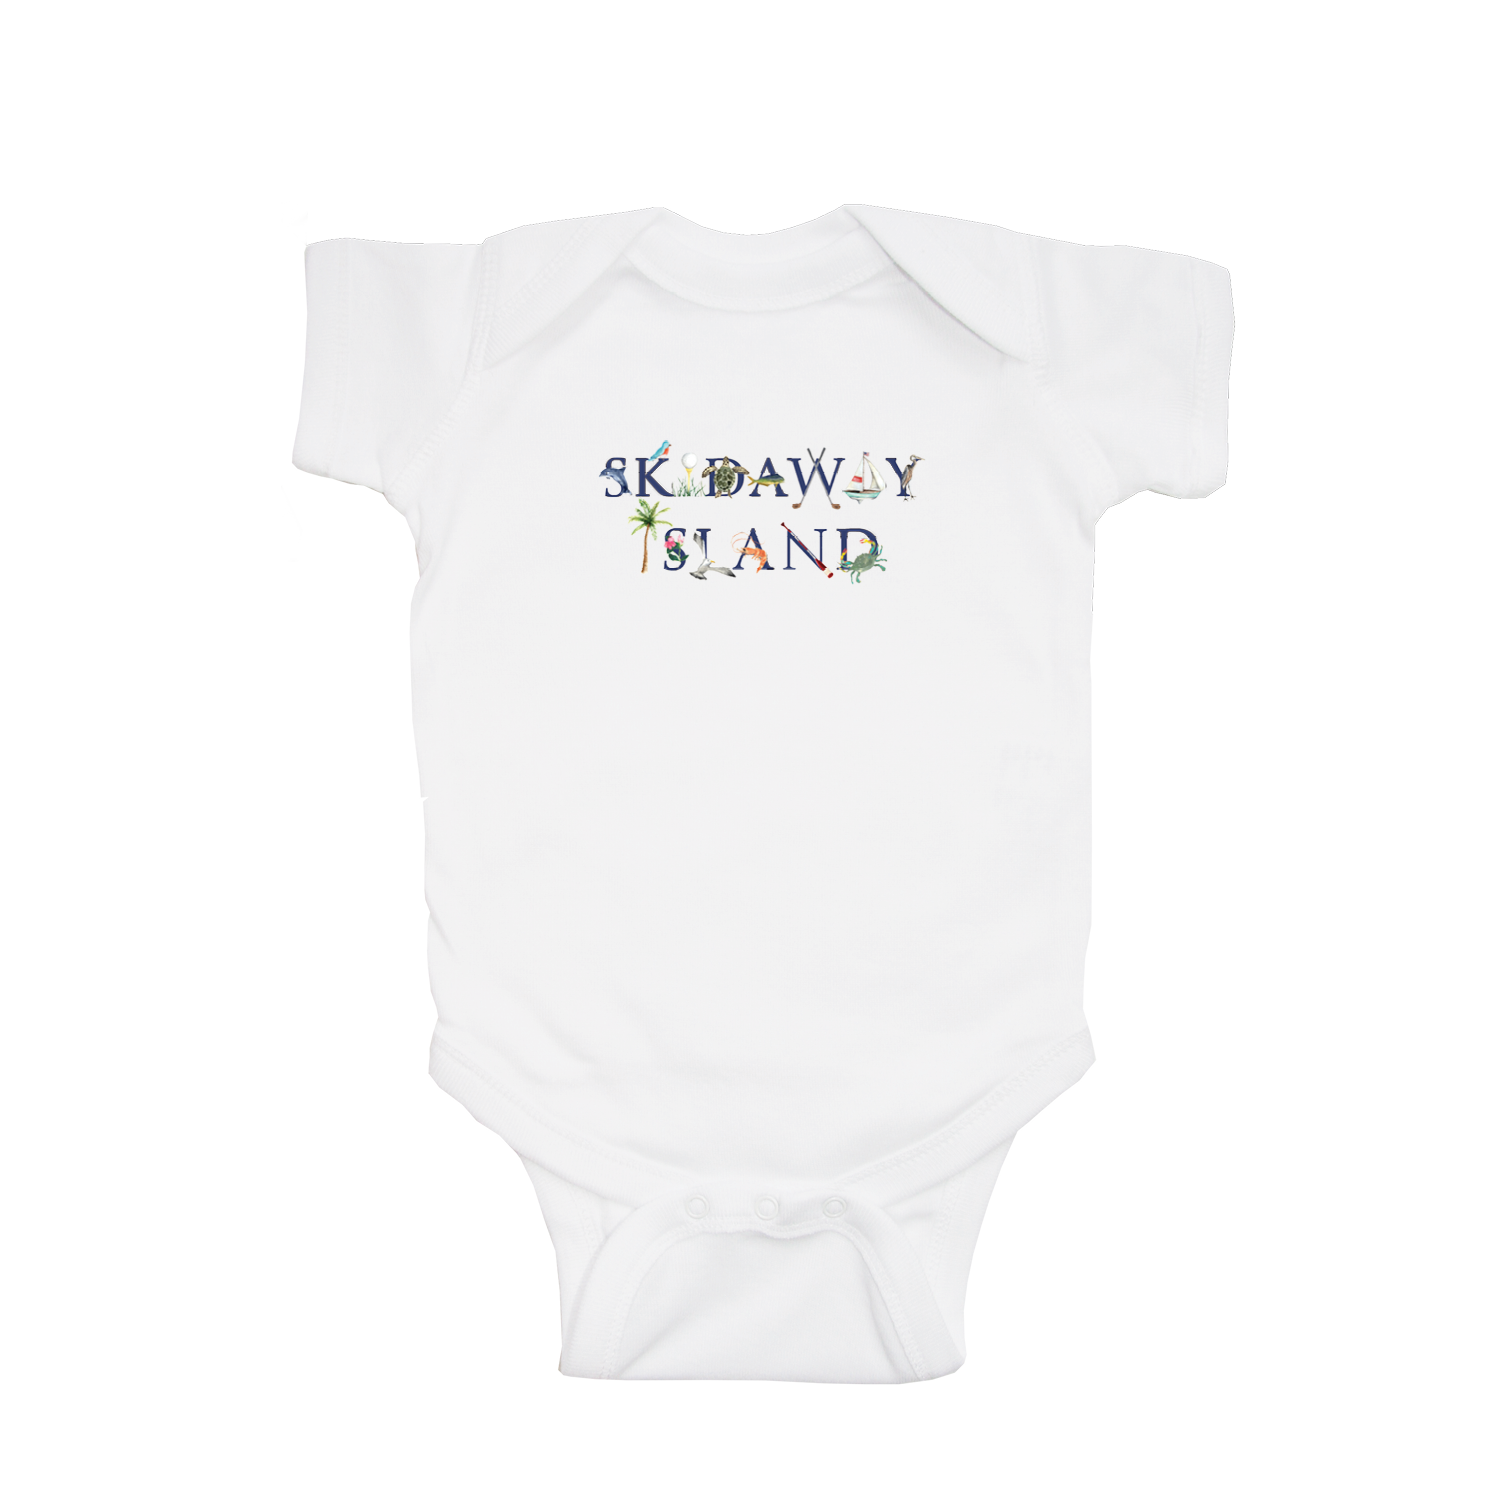 Skidaway Island baby snap up short sleeve